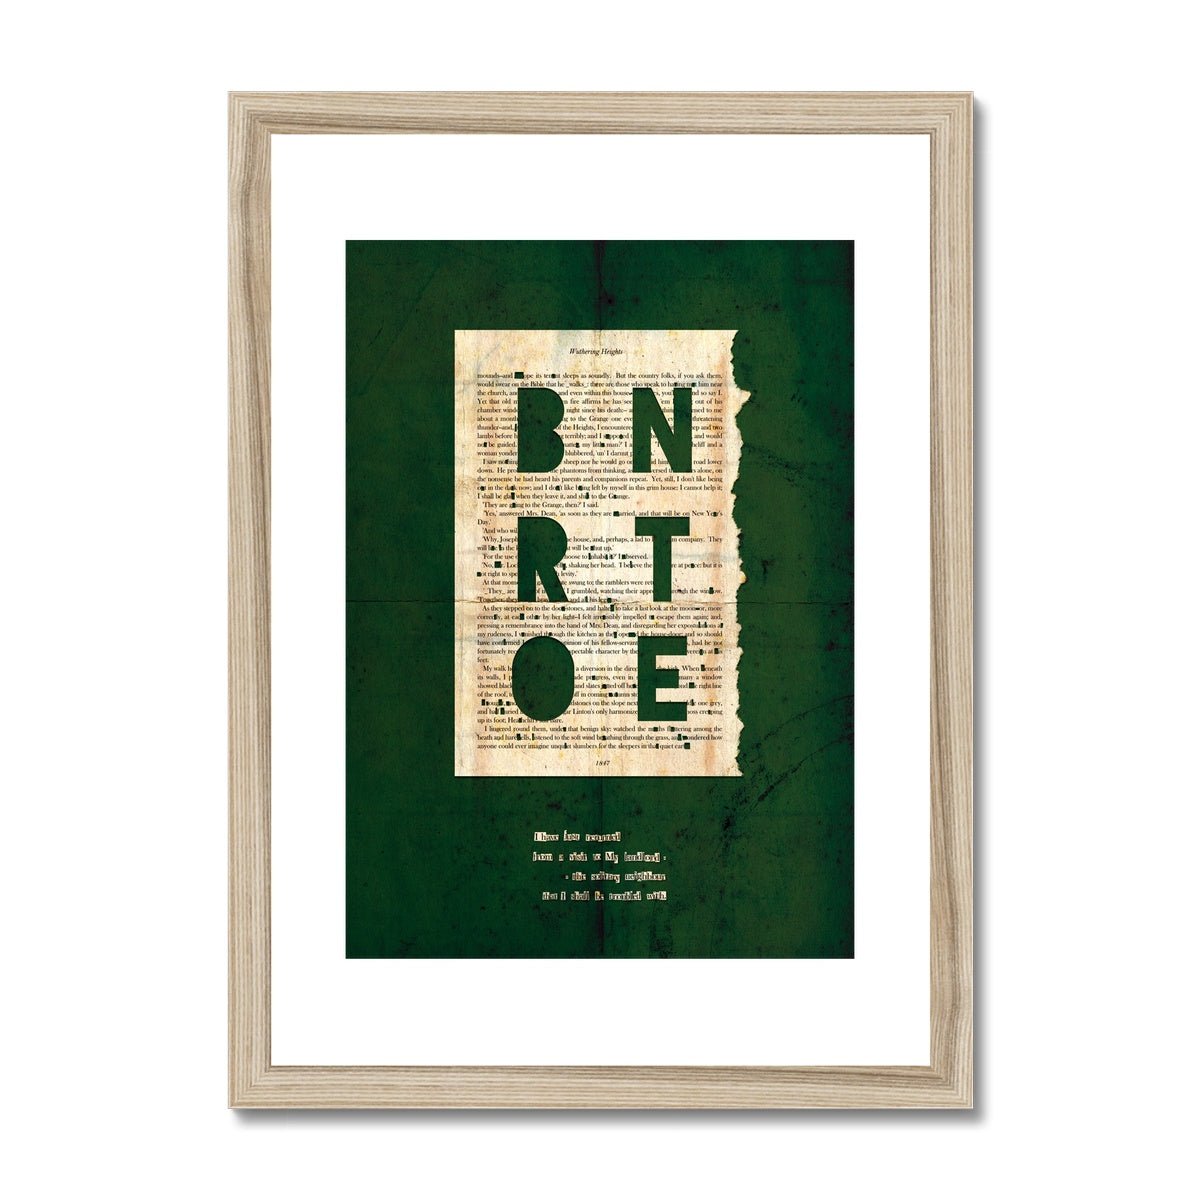 Wuthering Heights "Bronte" fine art literature print in green  // artist